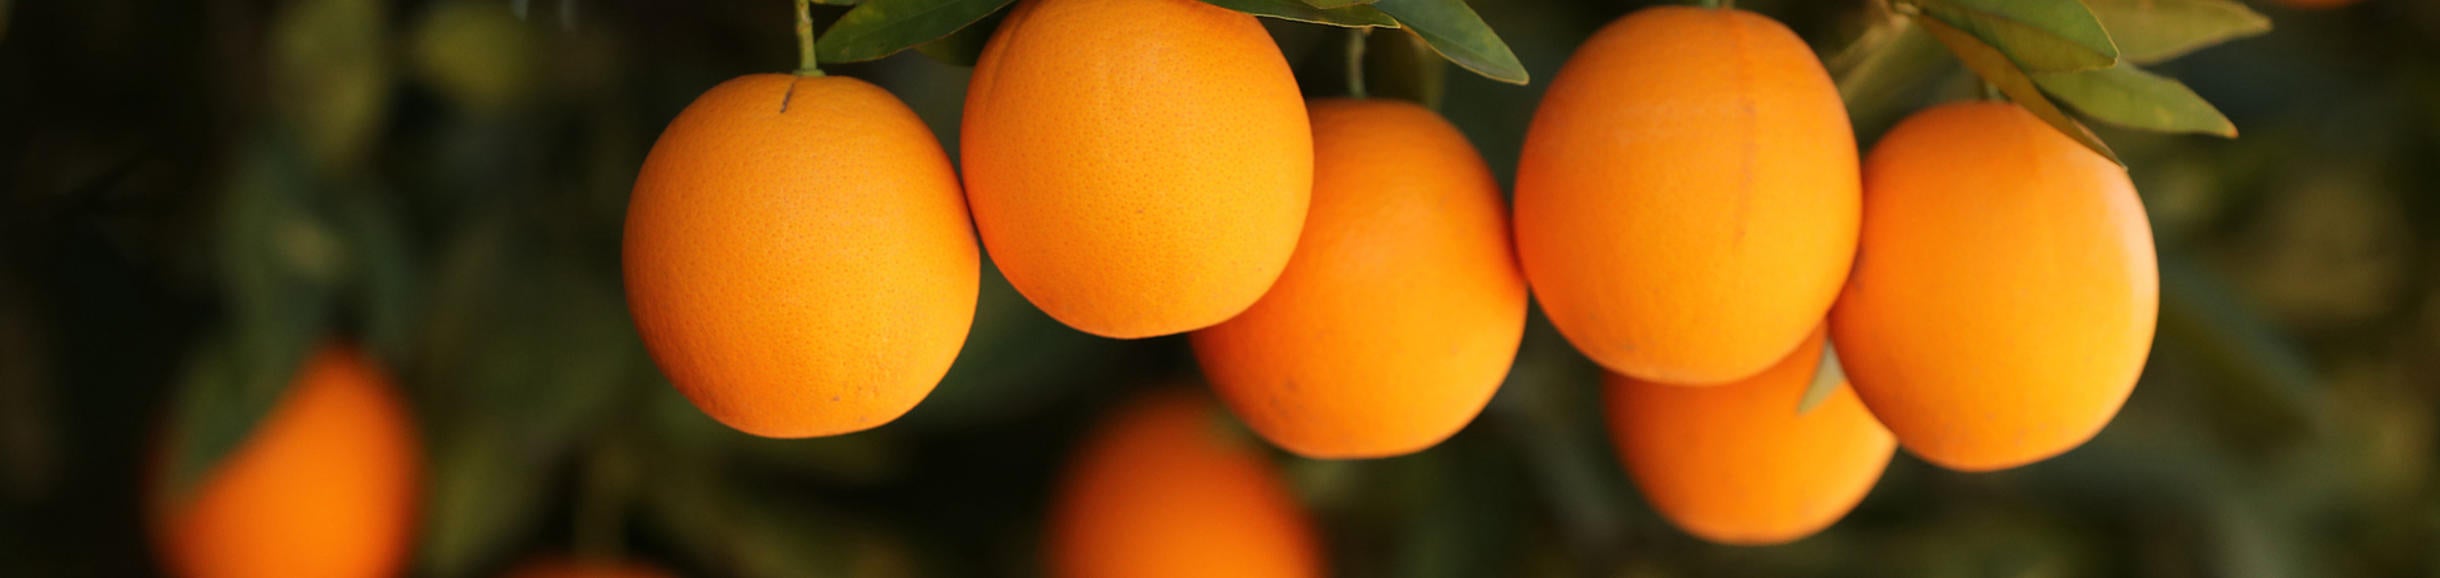 oranges in a tree (c) UCR/Stan Lim